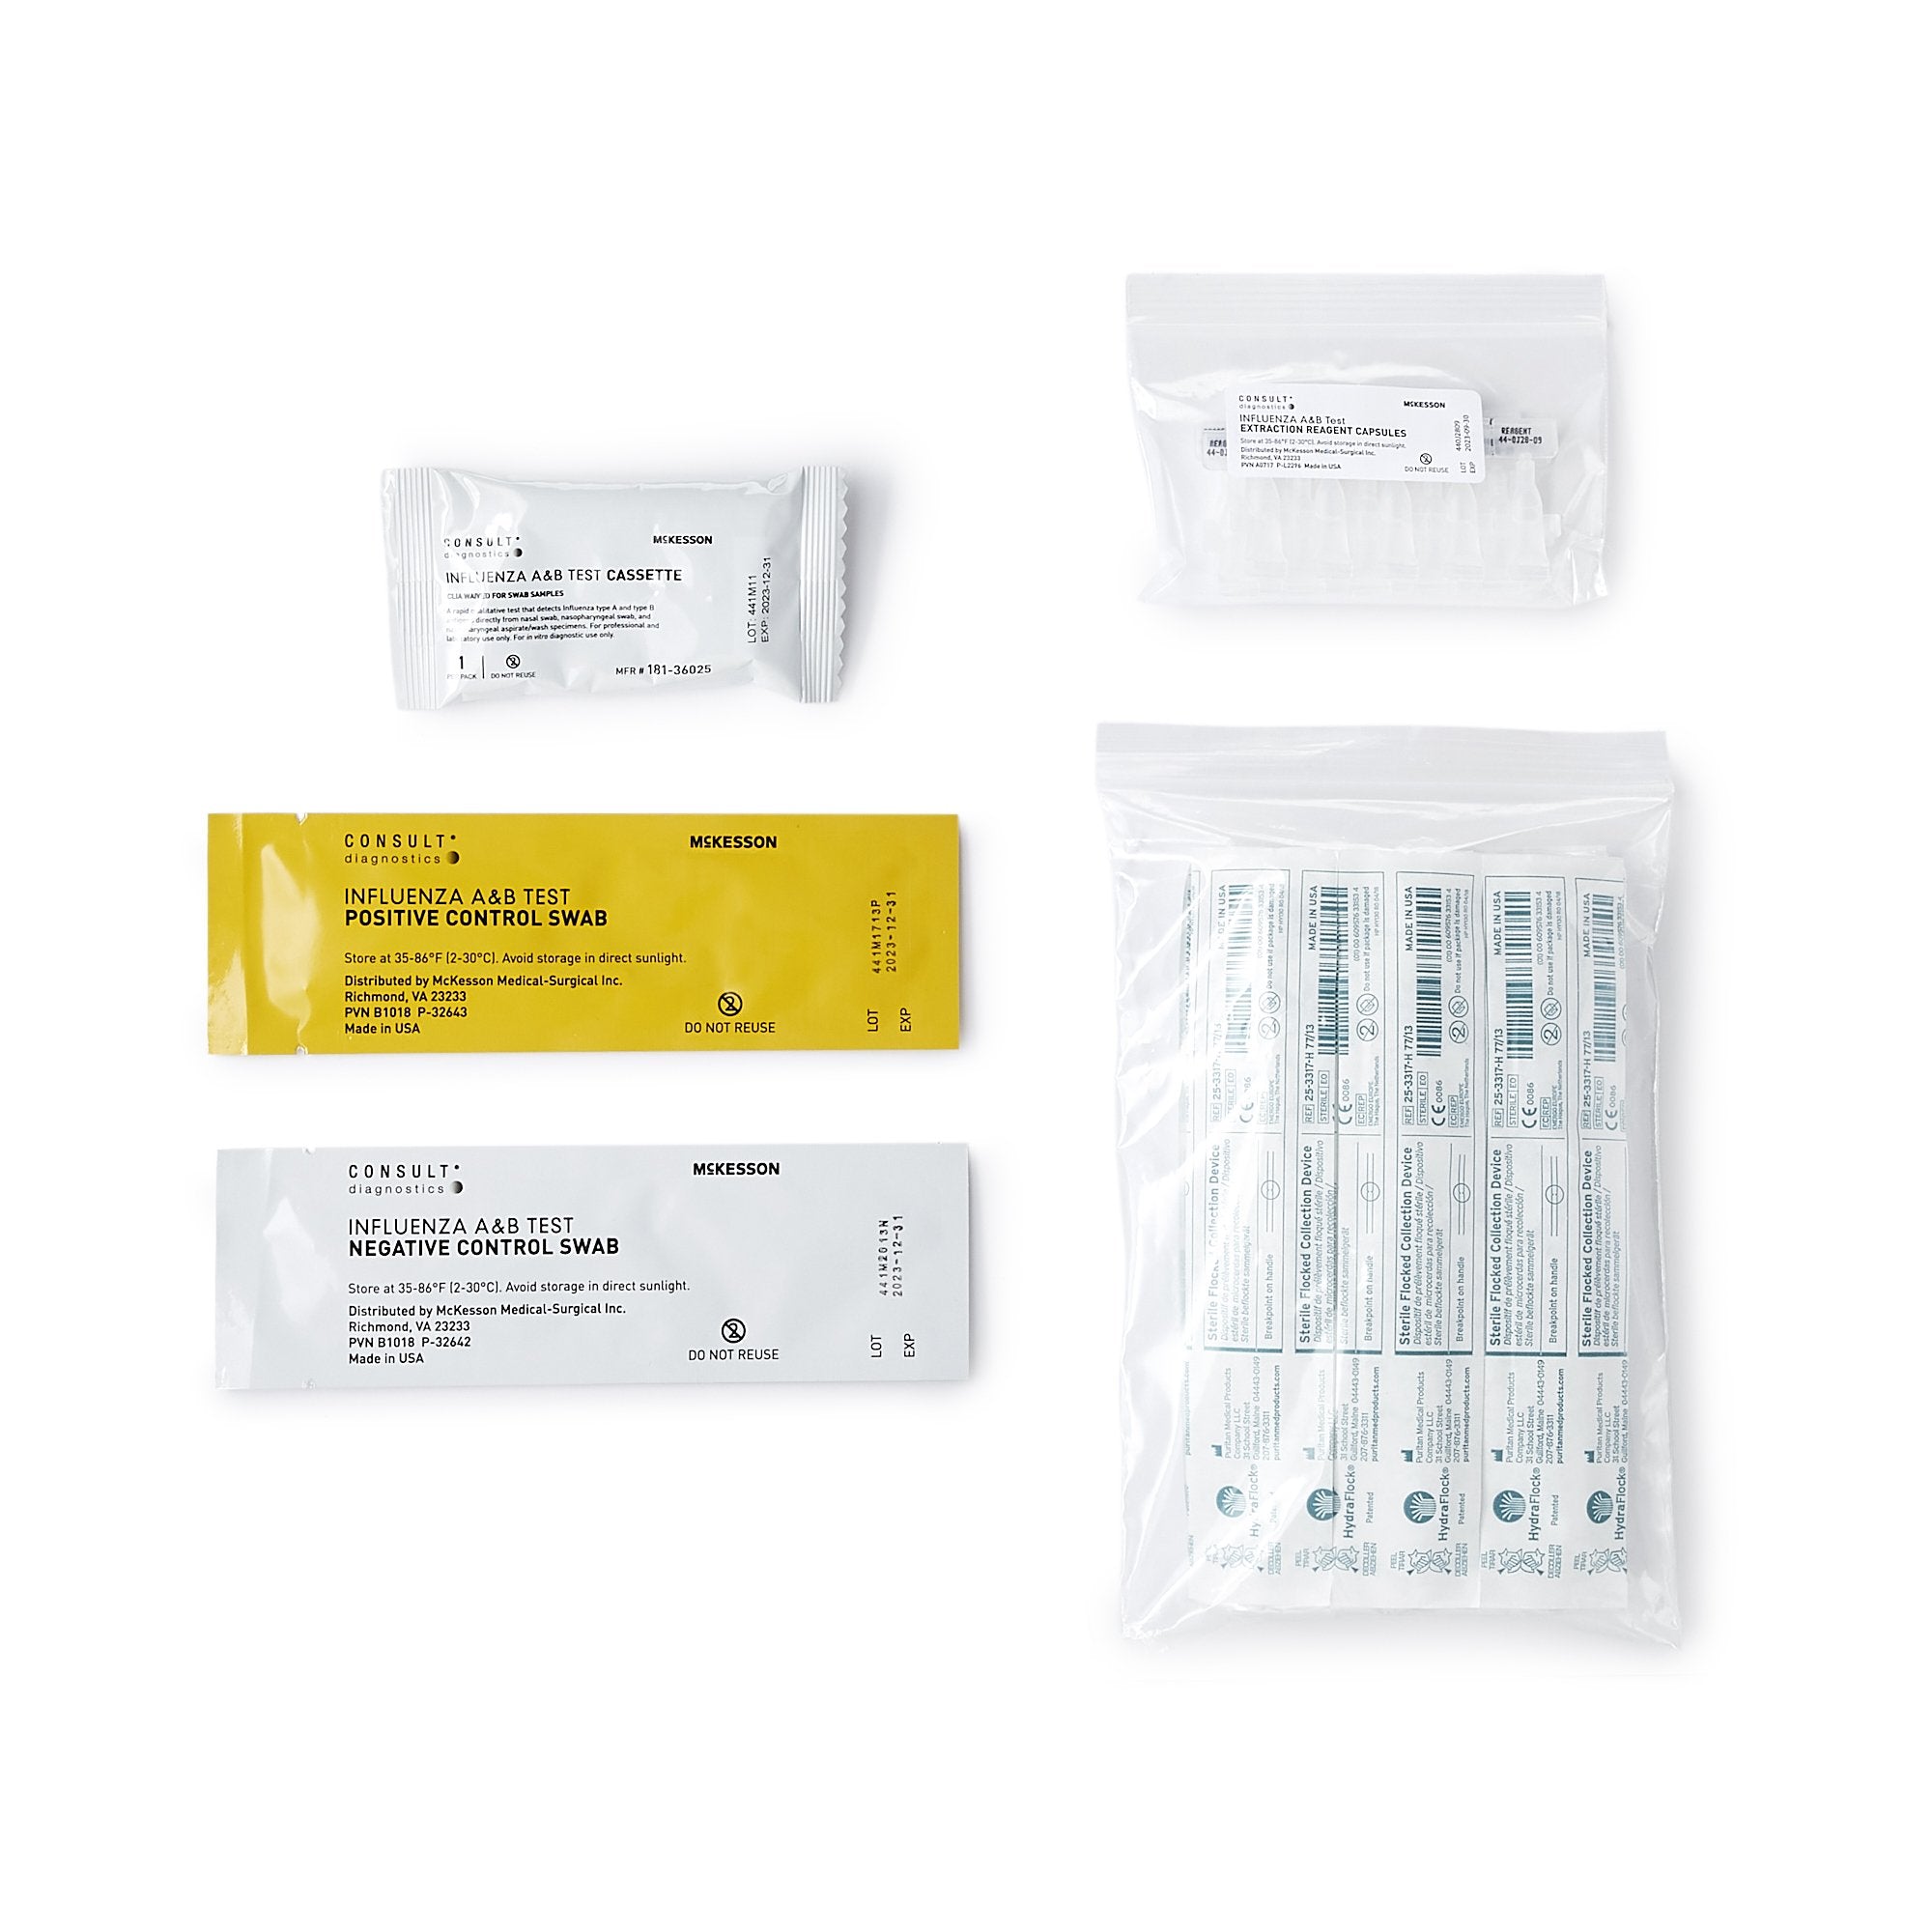 Respiratory Test Kit McKesson Consult Infectious Disease Immunoassay Influenza A + B Nasal Swab / Nasopharyngeal Wash / Nasopharyngeal Aspirate Sample 25 Tests CLIA Waived